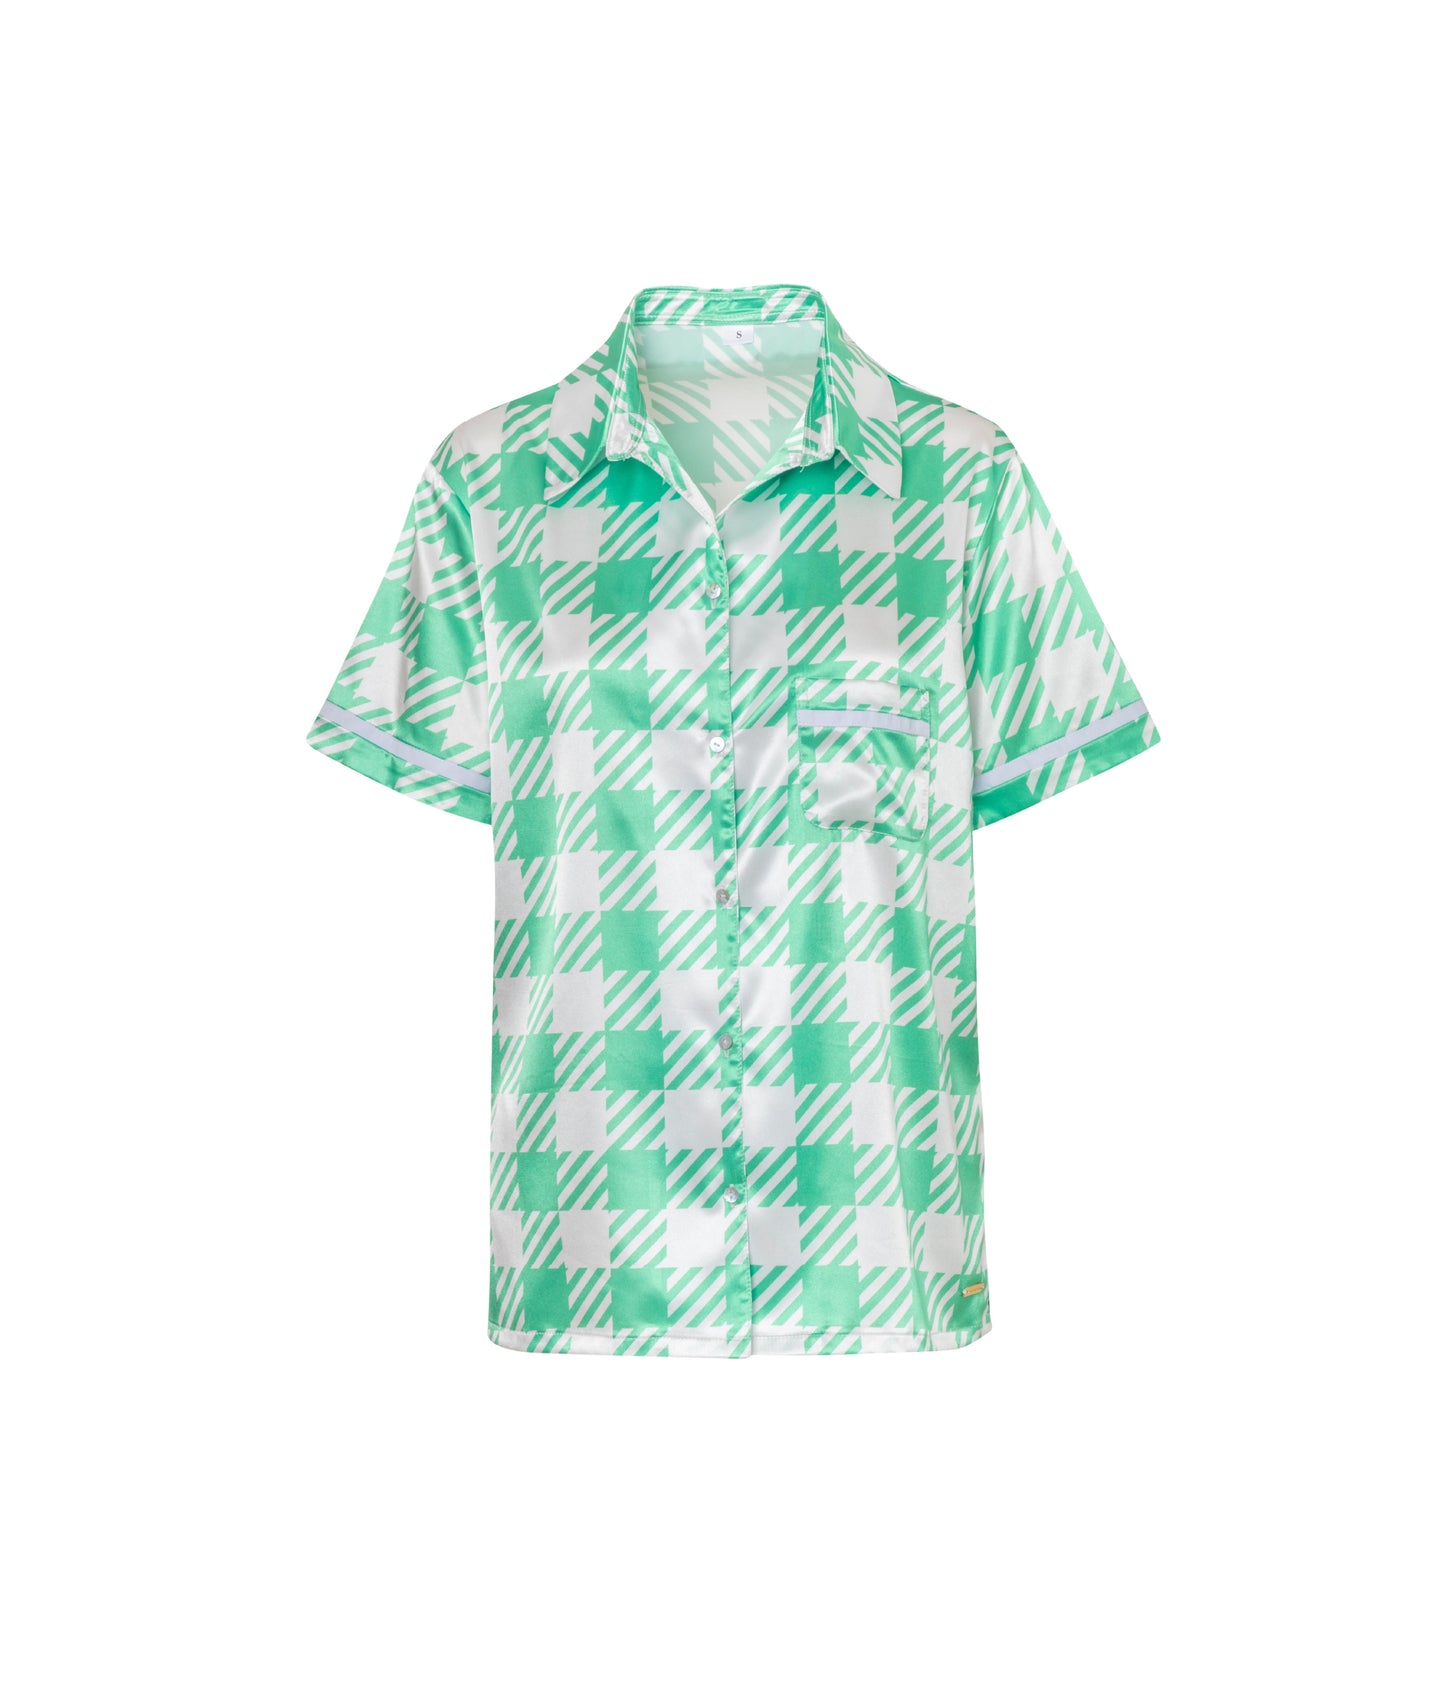 Verdelimon - Shirts - Malambo - Printed - Green Squares - Front